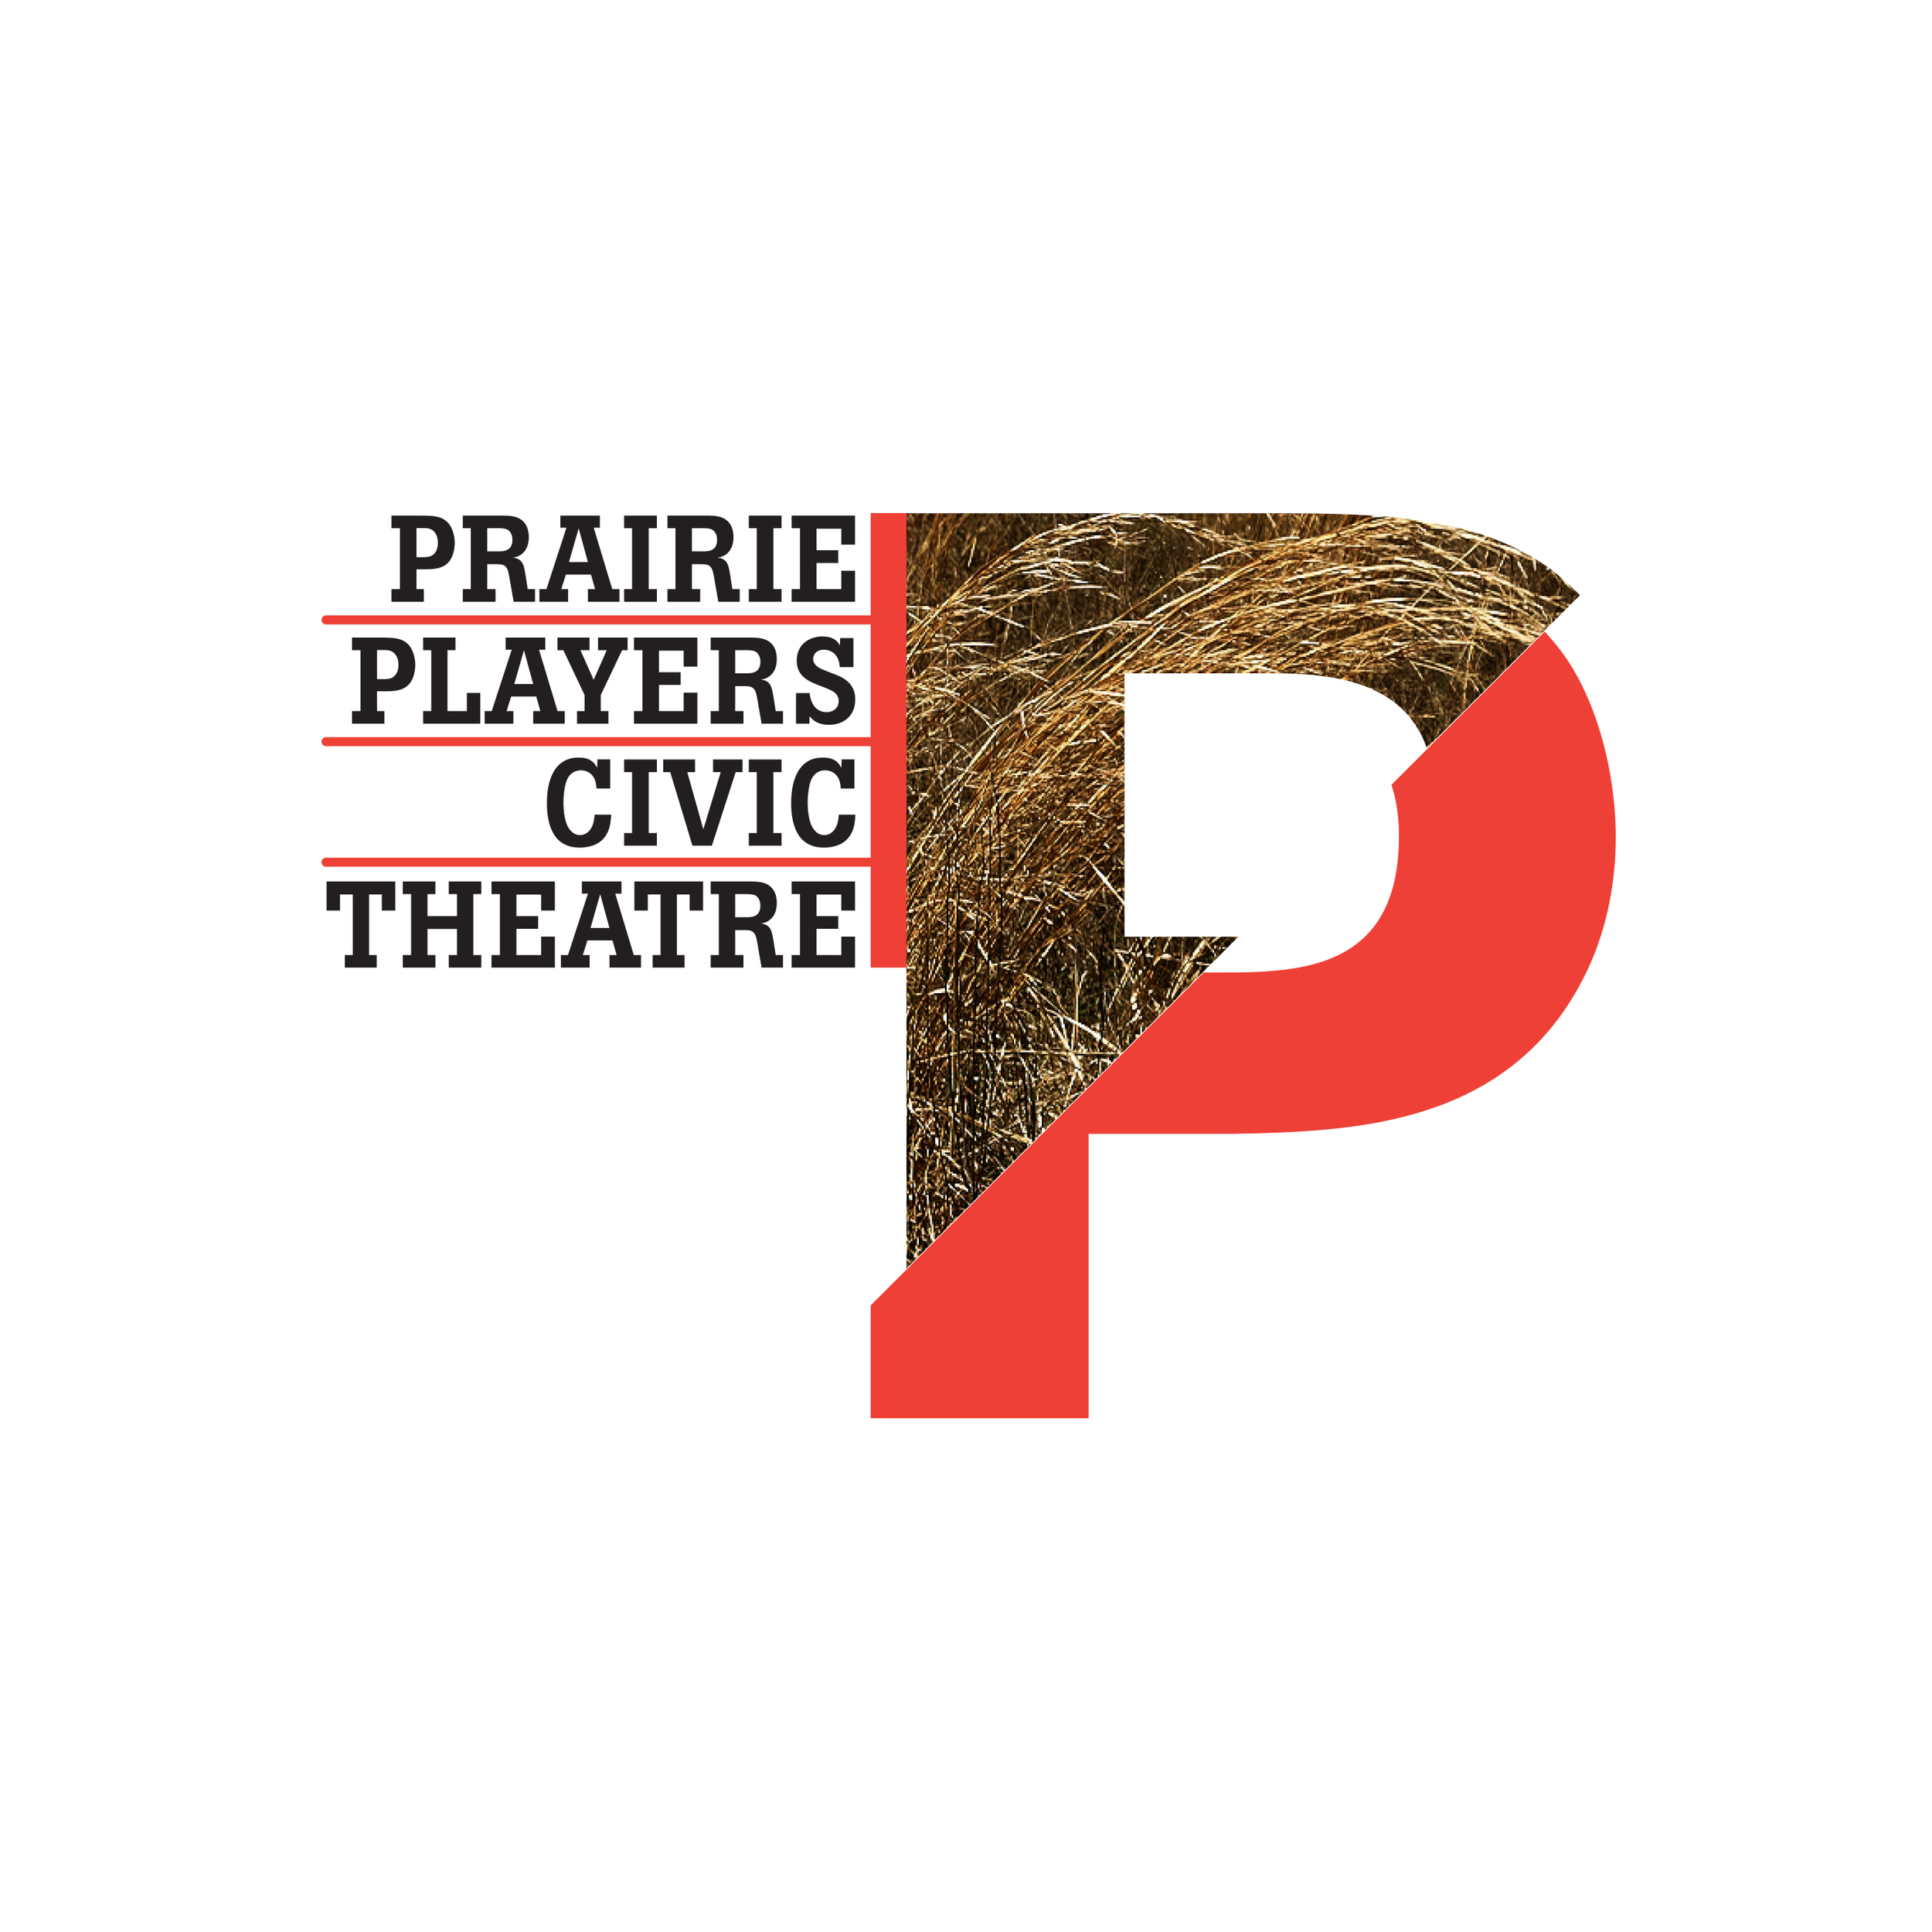 2014: Prairie Players Civic Theatre (proposed logo)